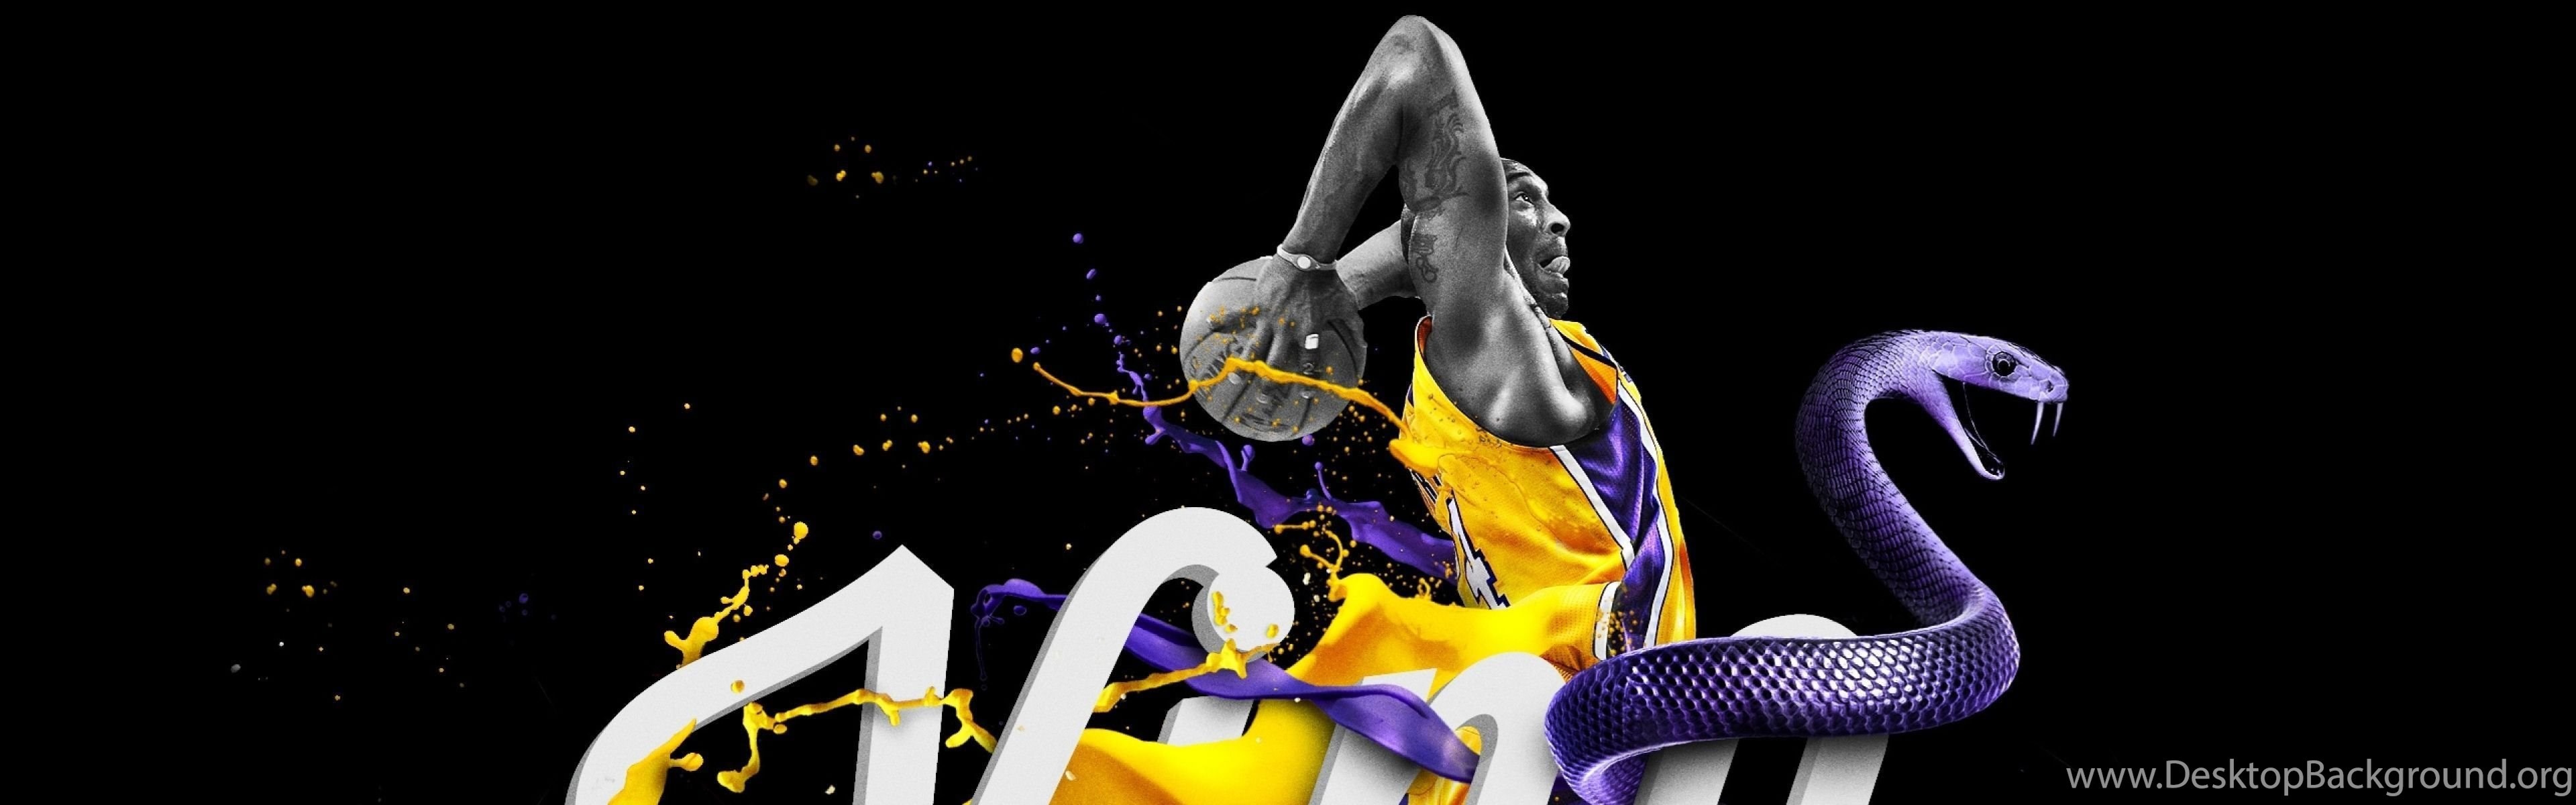 Trainees2013: Animated Background Kobe Bryant Wallpaper